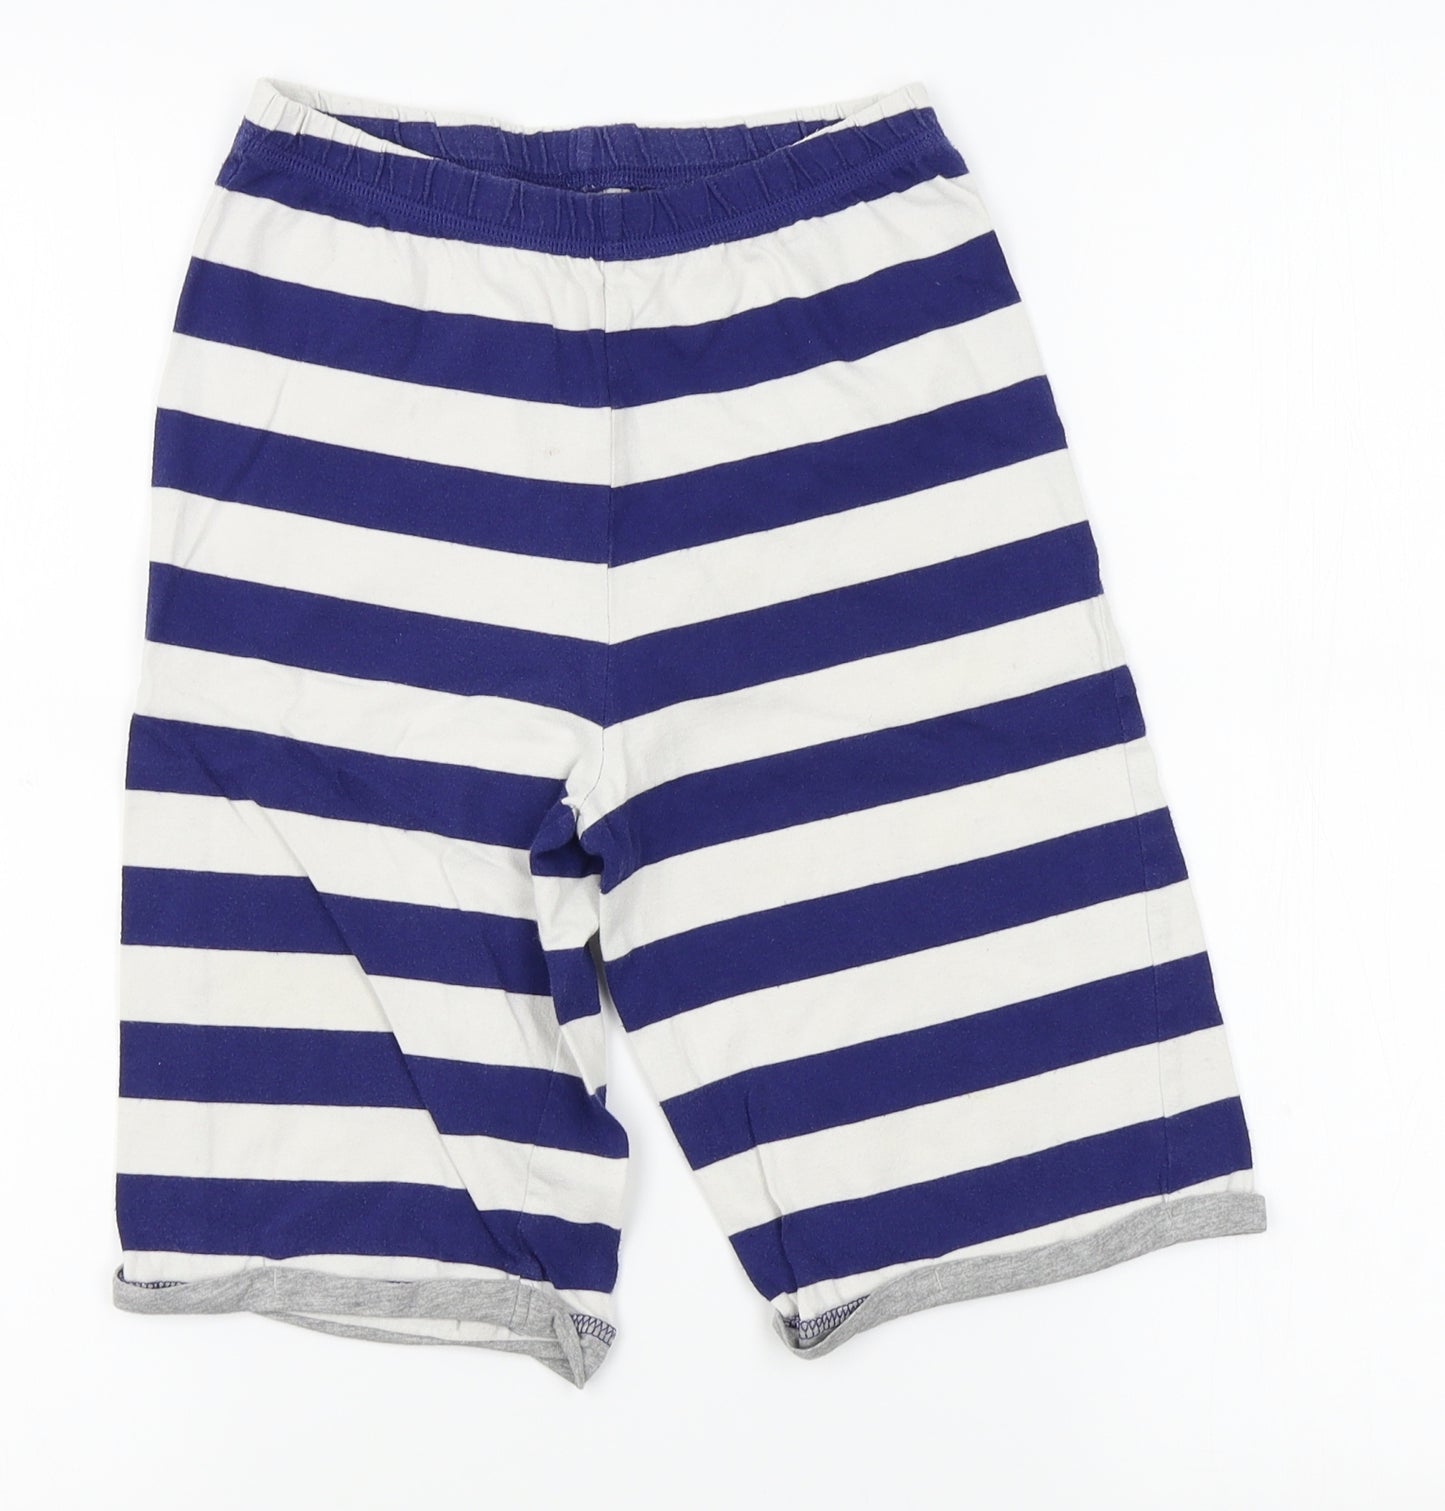 George Boys Blue Striped   Pyjama Pants Size 9-10 Years